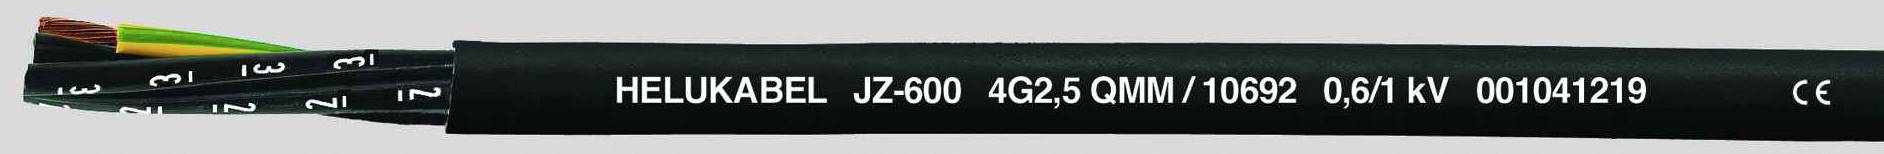 HELUKABEL JZ-600 Steuerleitung 3 G 0.50 mm² Schwarz 10551-500 500 m